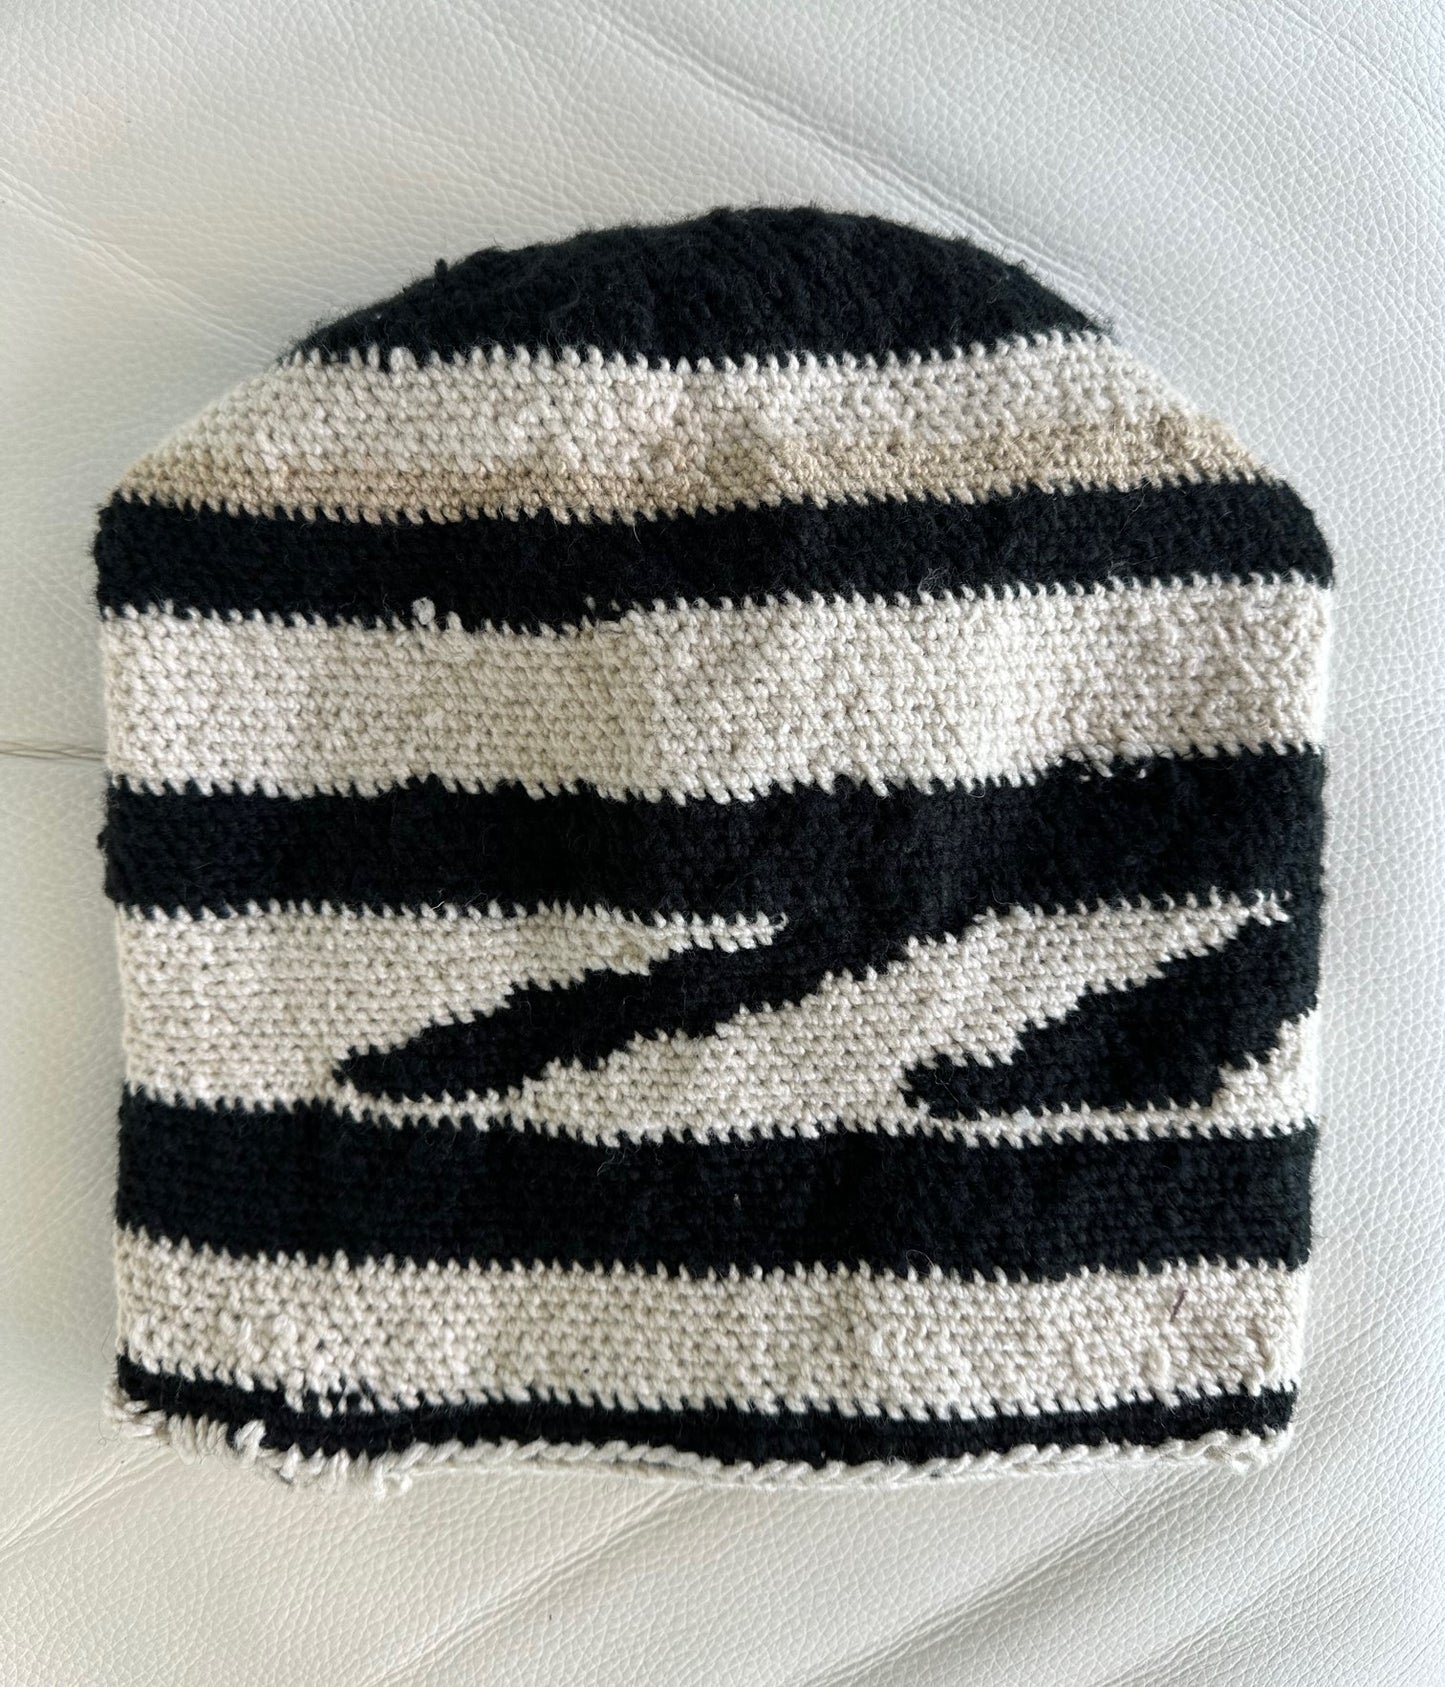 ARHUACO mochila crossbody bag - Colombian Sierra Nevada native Arhuaco hand crocheted wool cotton